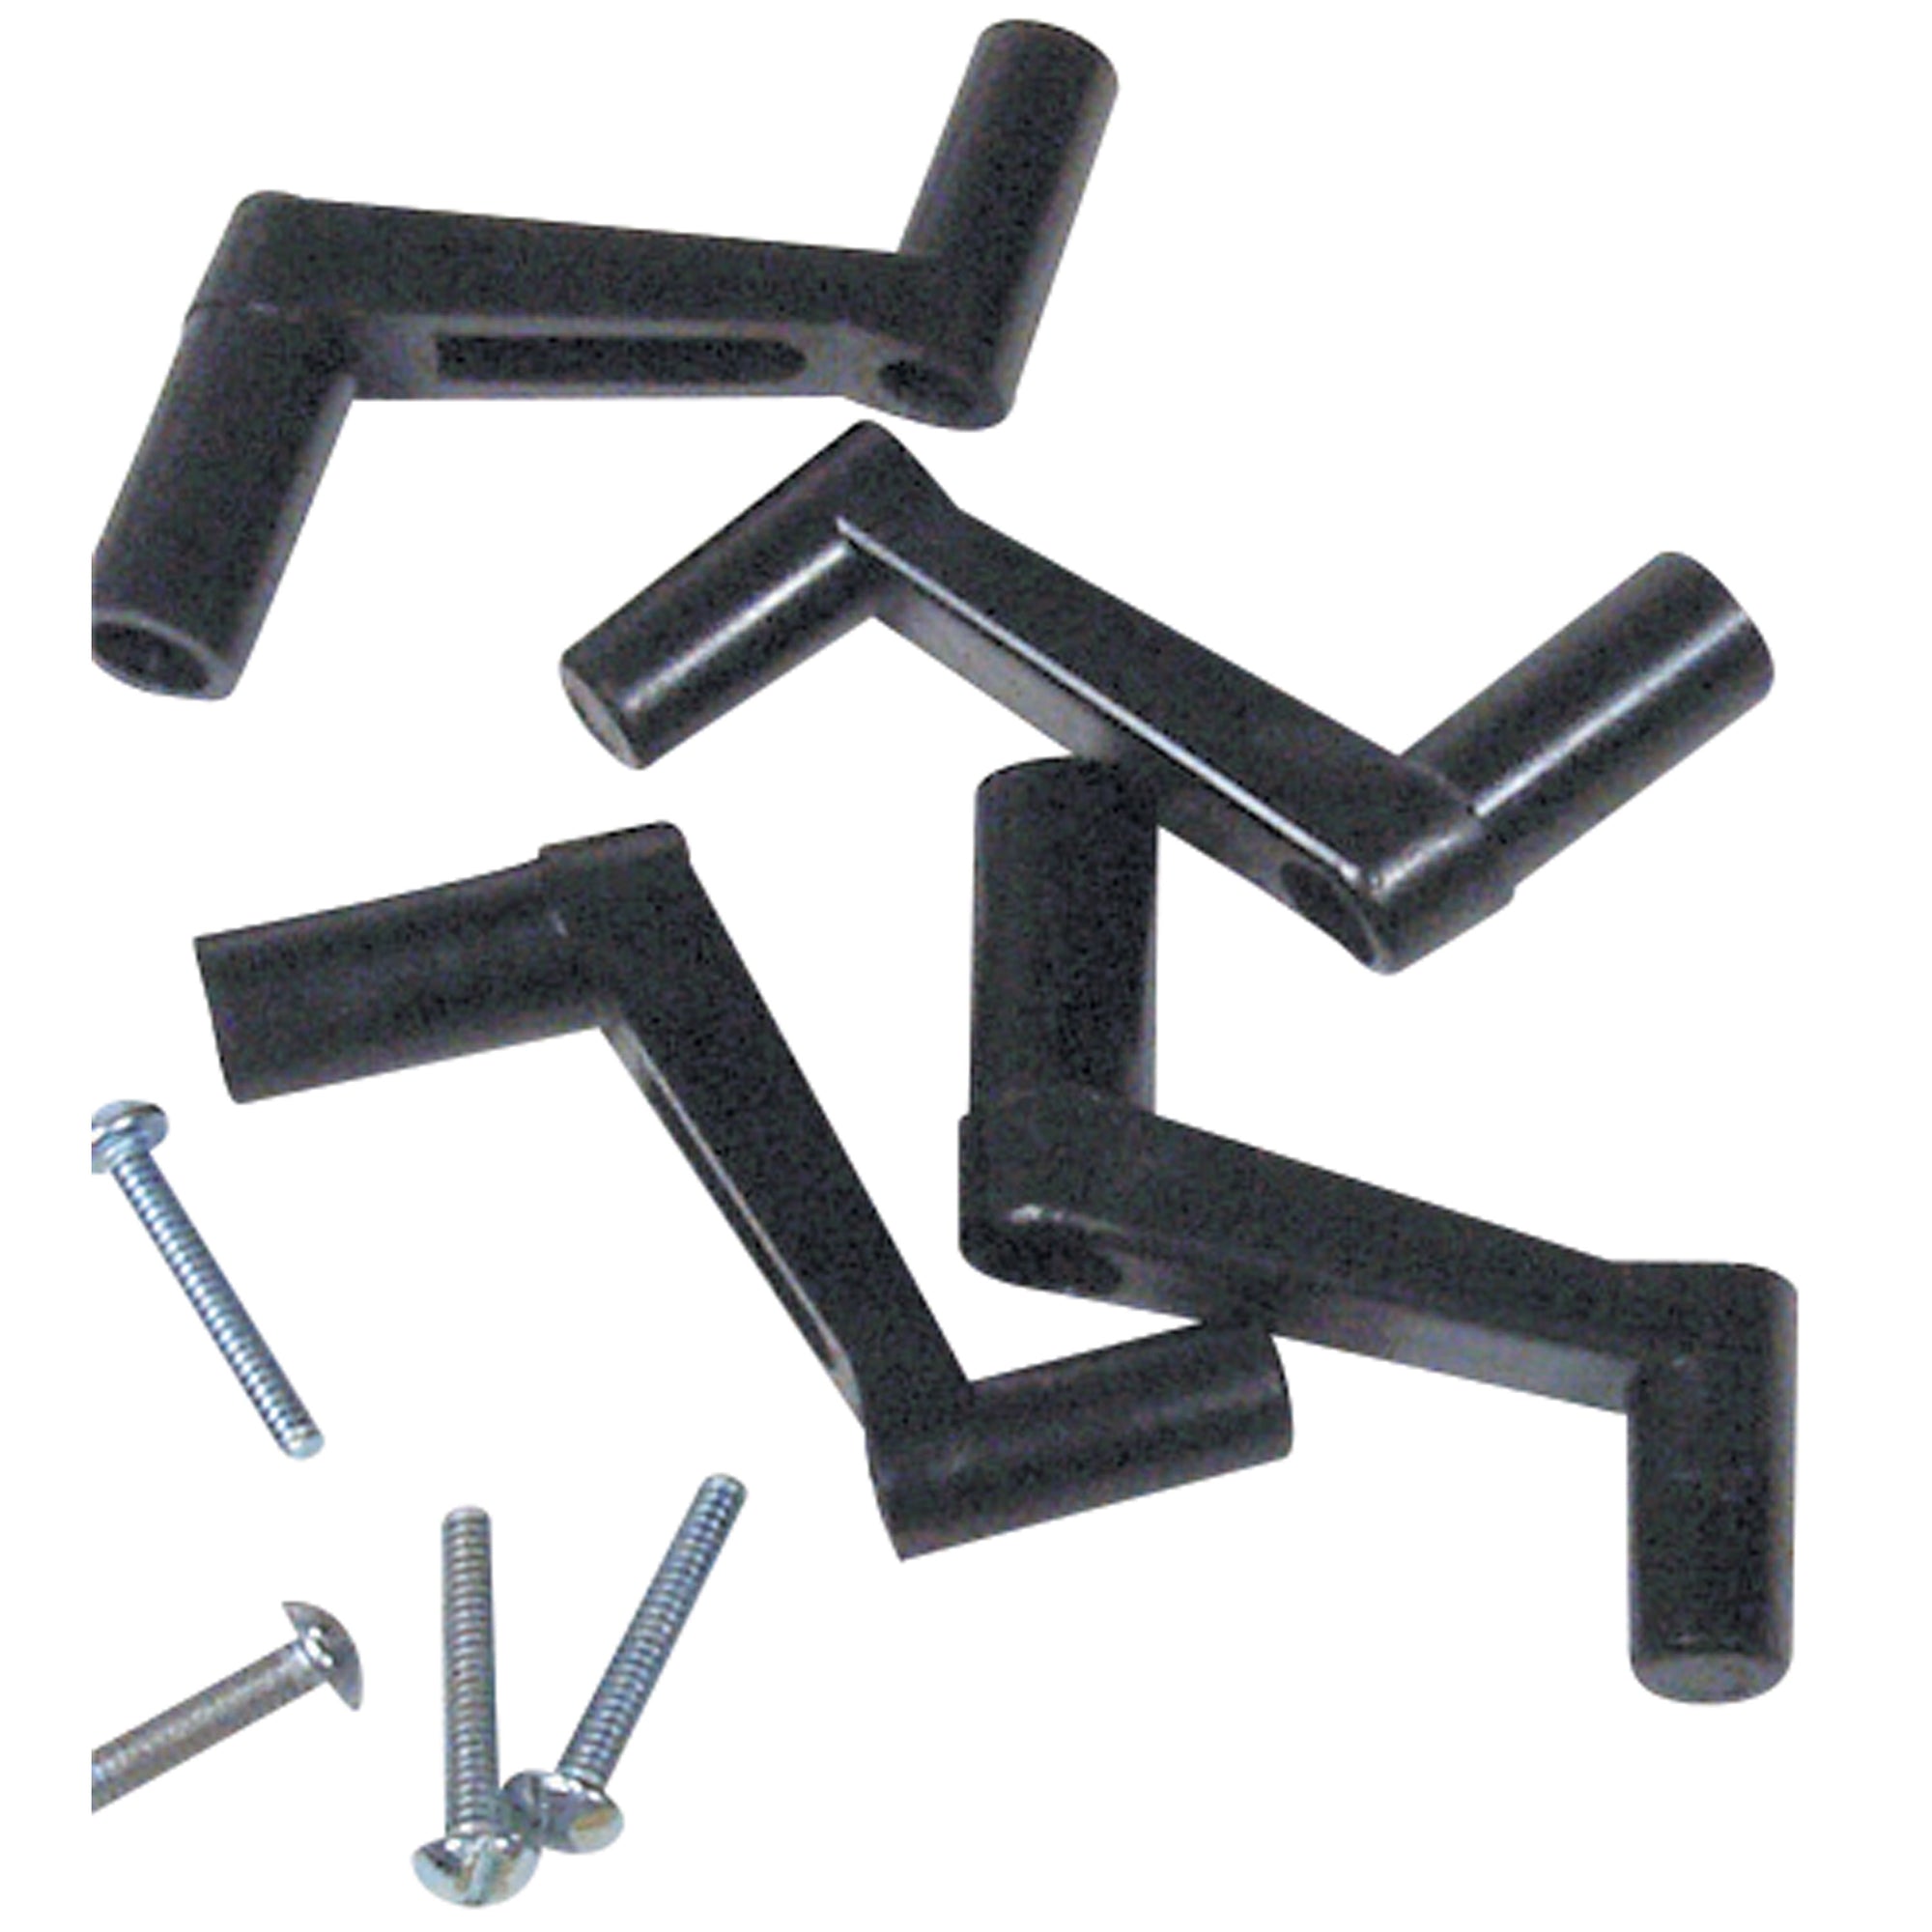 Strybuc 881C4-BLK Black Plastic Crank Handles - Pack of 4, 1-3/4"